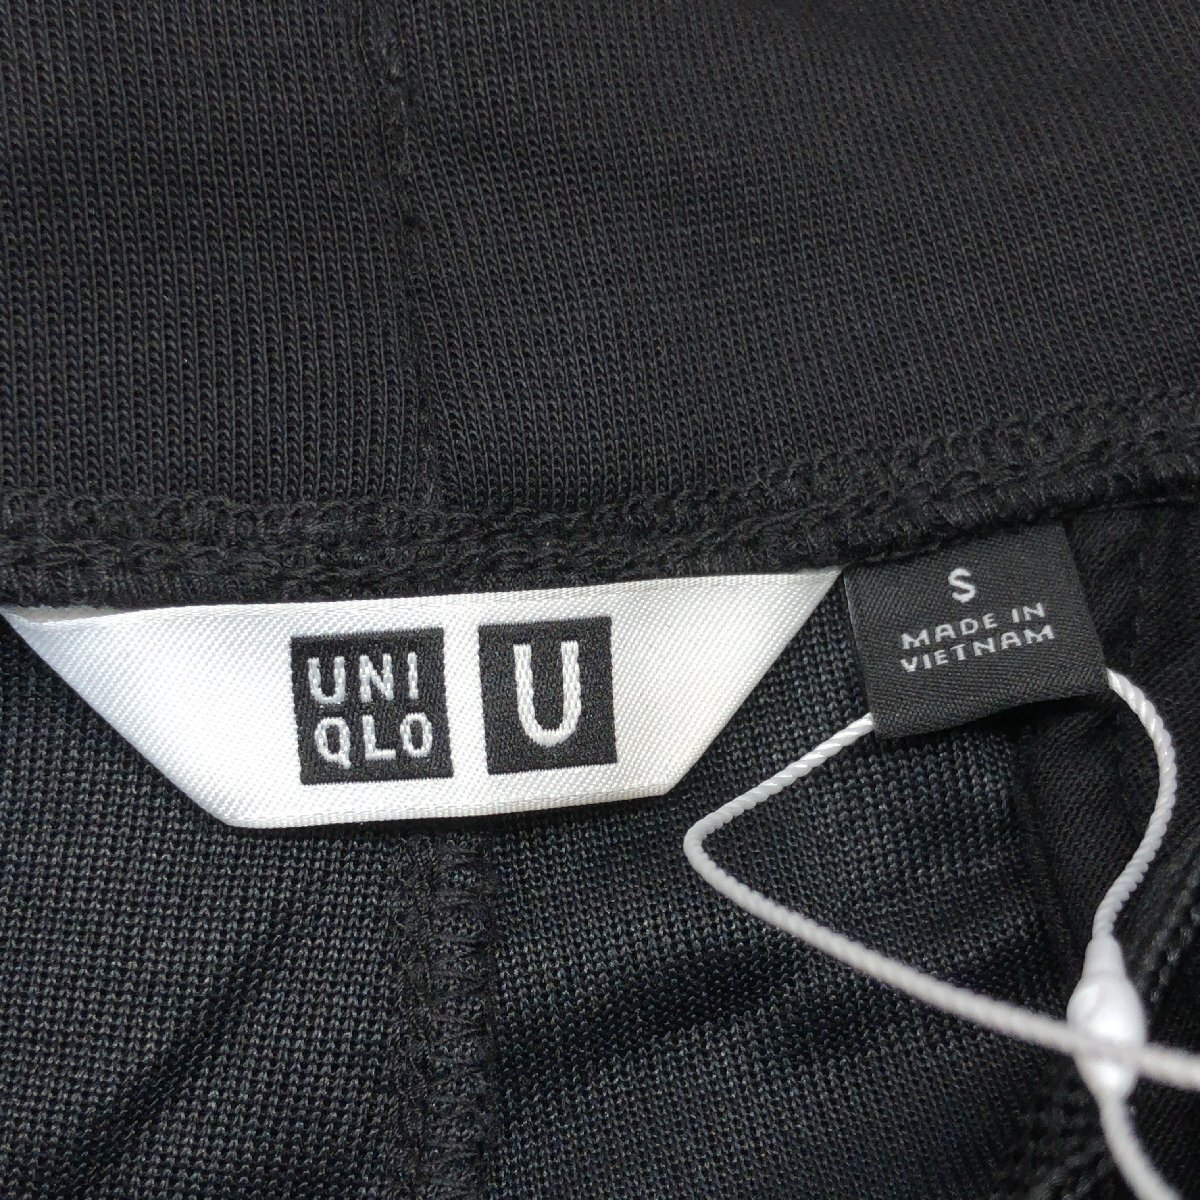  new goods UNIQLO U Uniqlo You regular price 3,990 jpy sweat gya The - pants S black black wide pants ru mail unused for women 